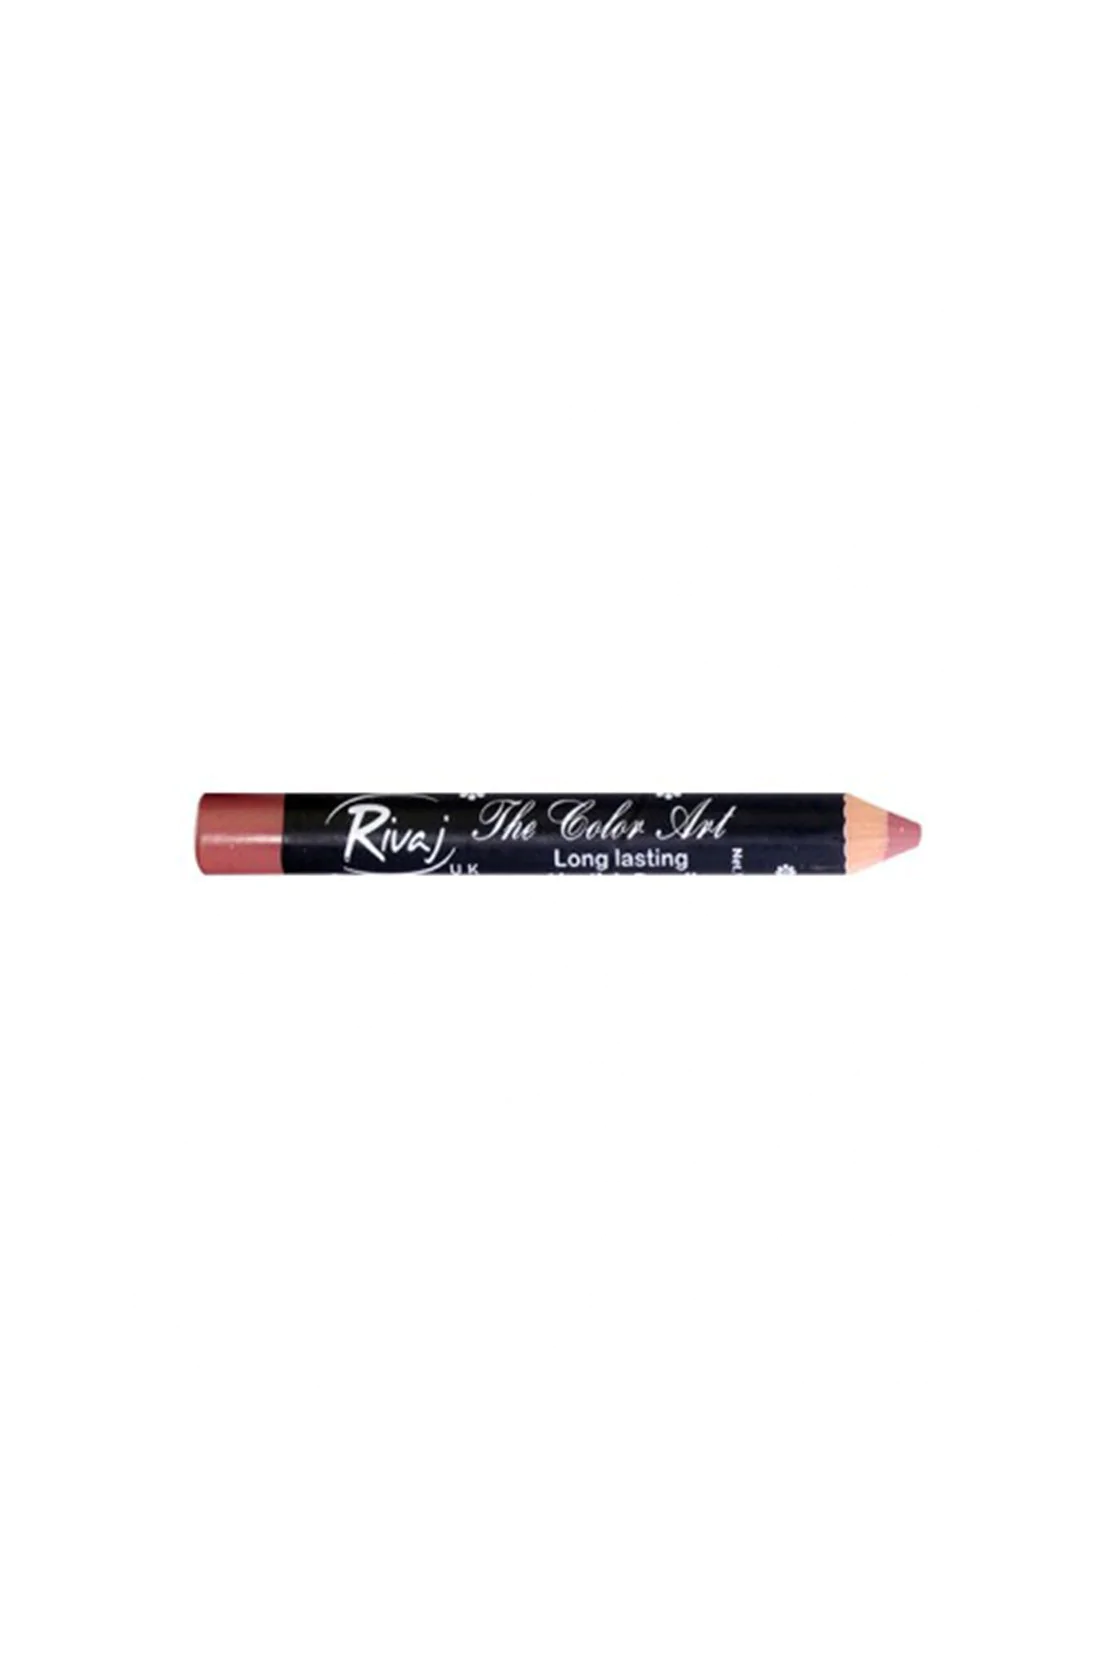 Rivaj Uk The Color Art Lipstick Pencil 047 Cerise - Highfy.pk